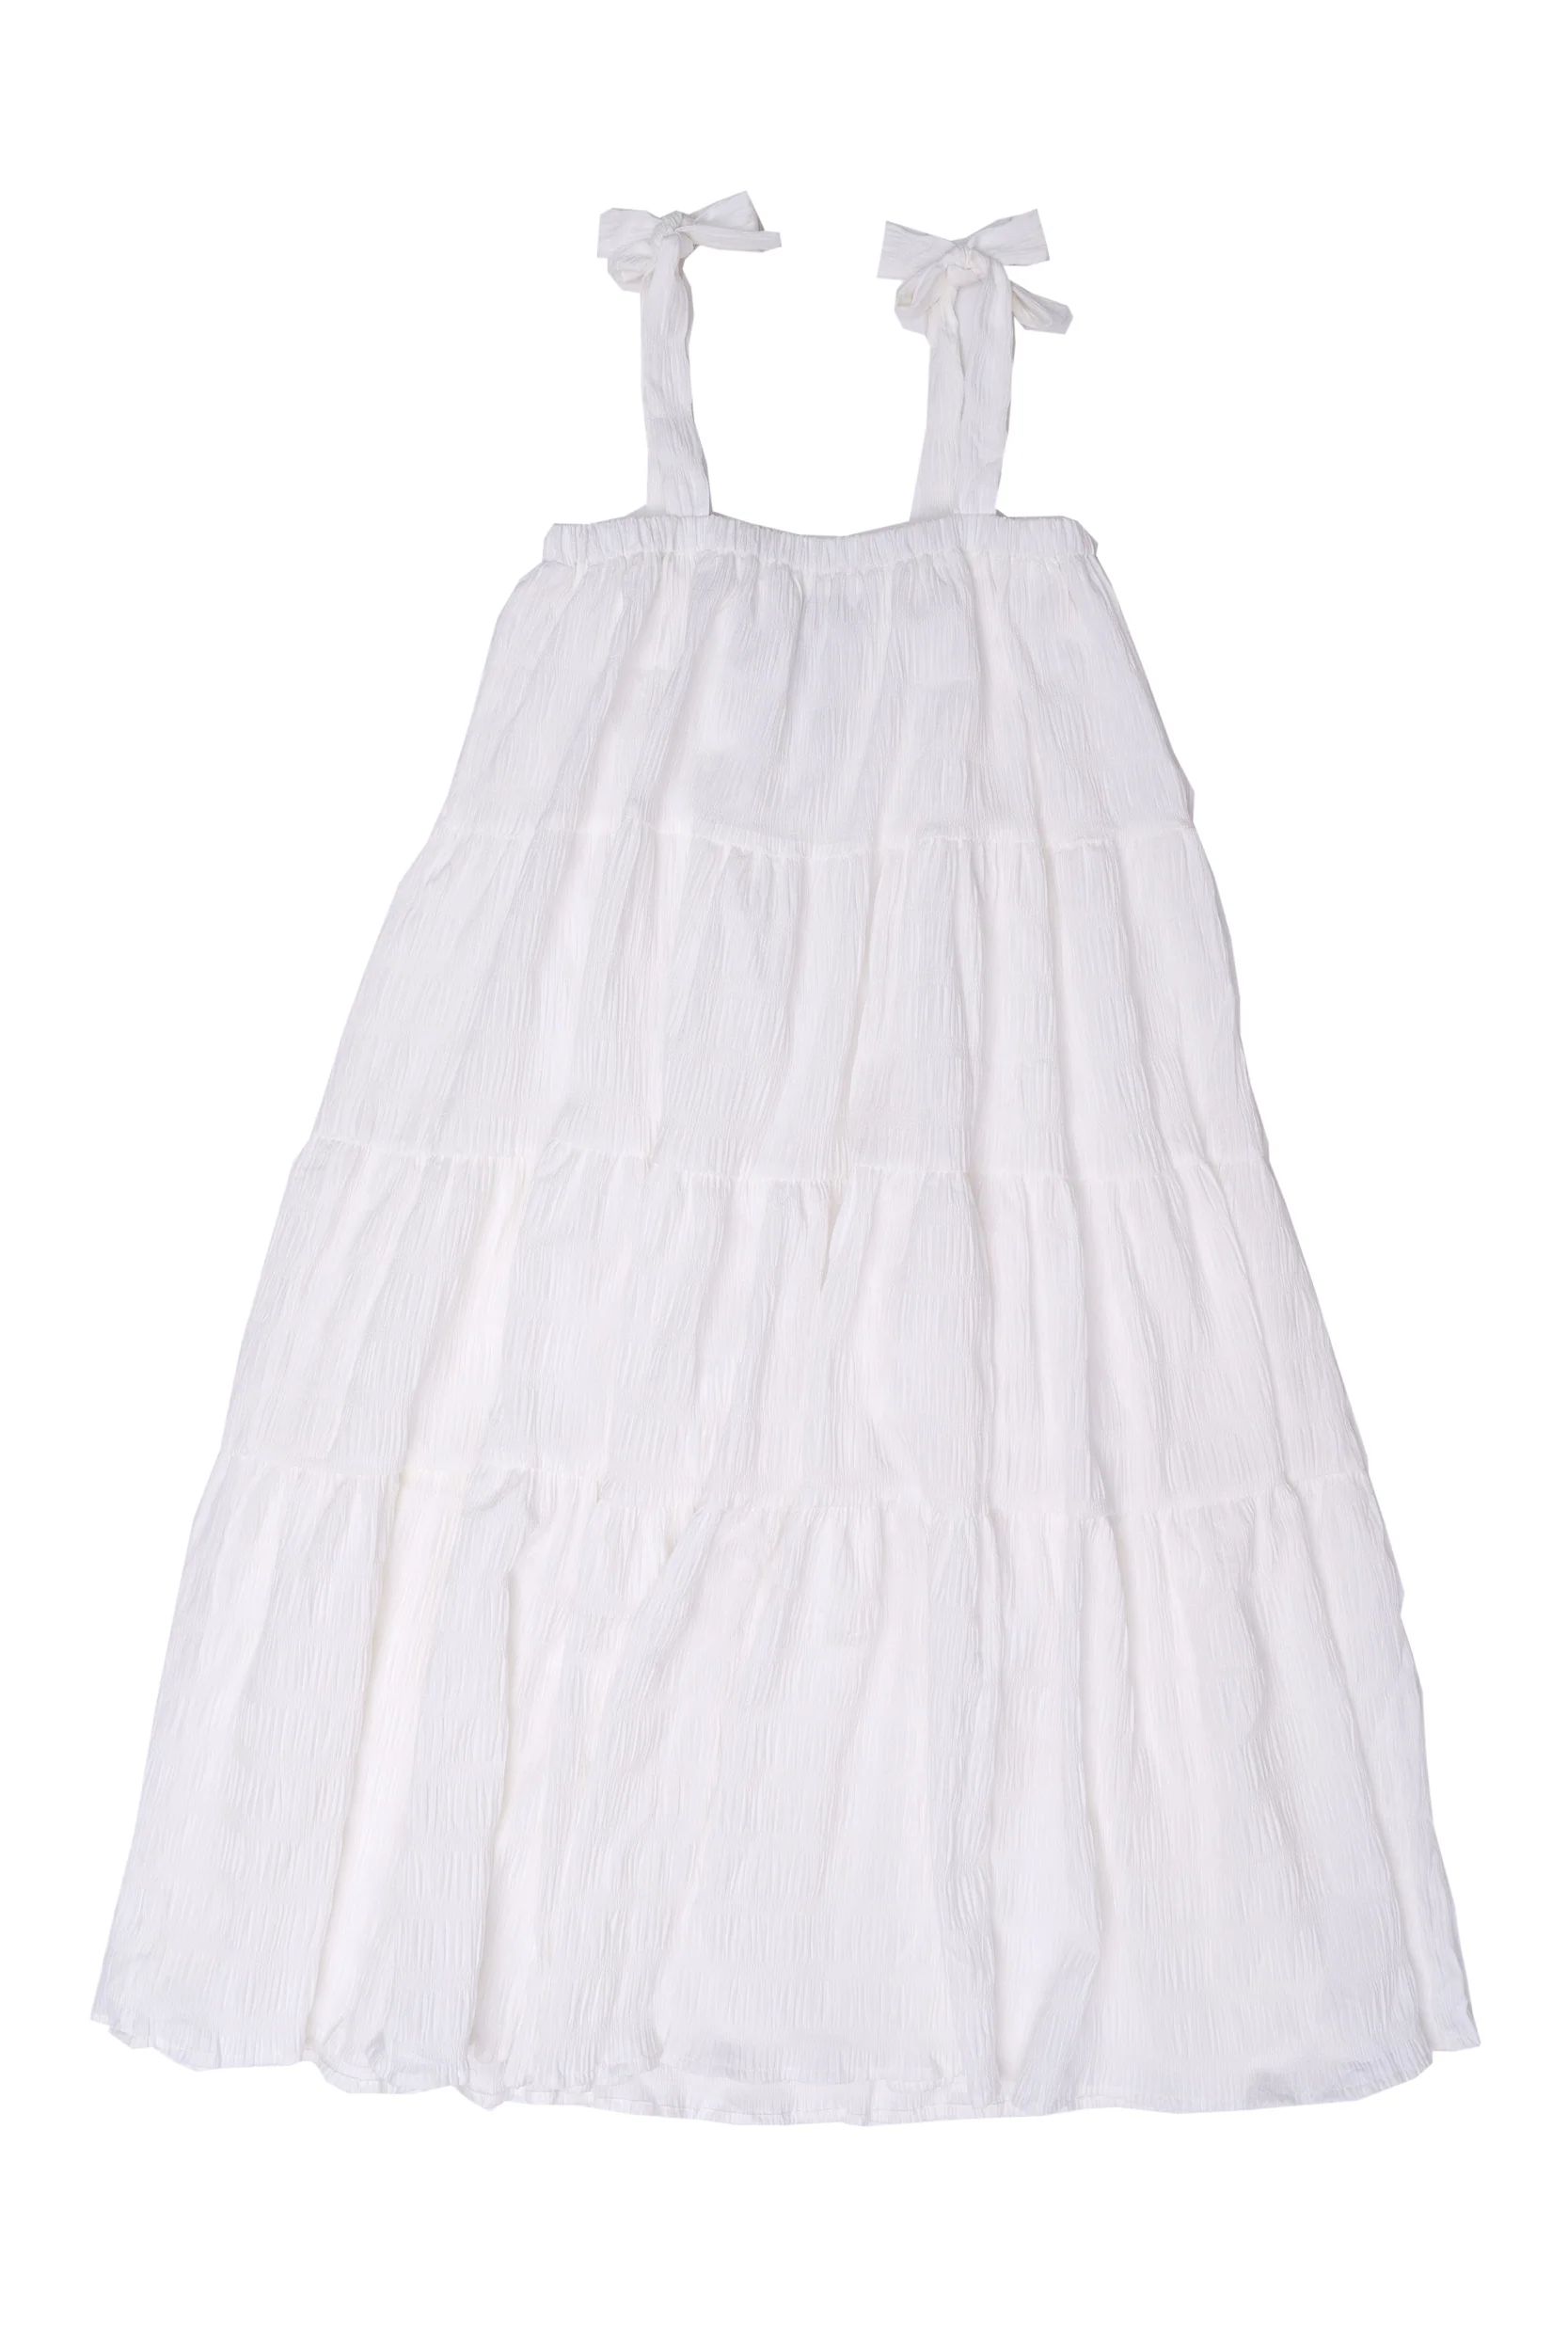 Mom White Check Dress | The Oaks Apparel Company